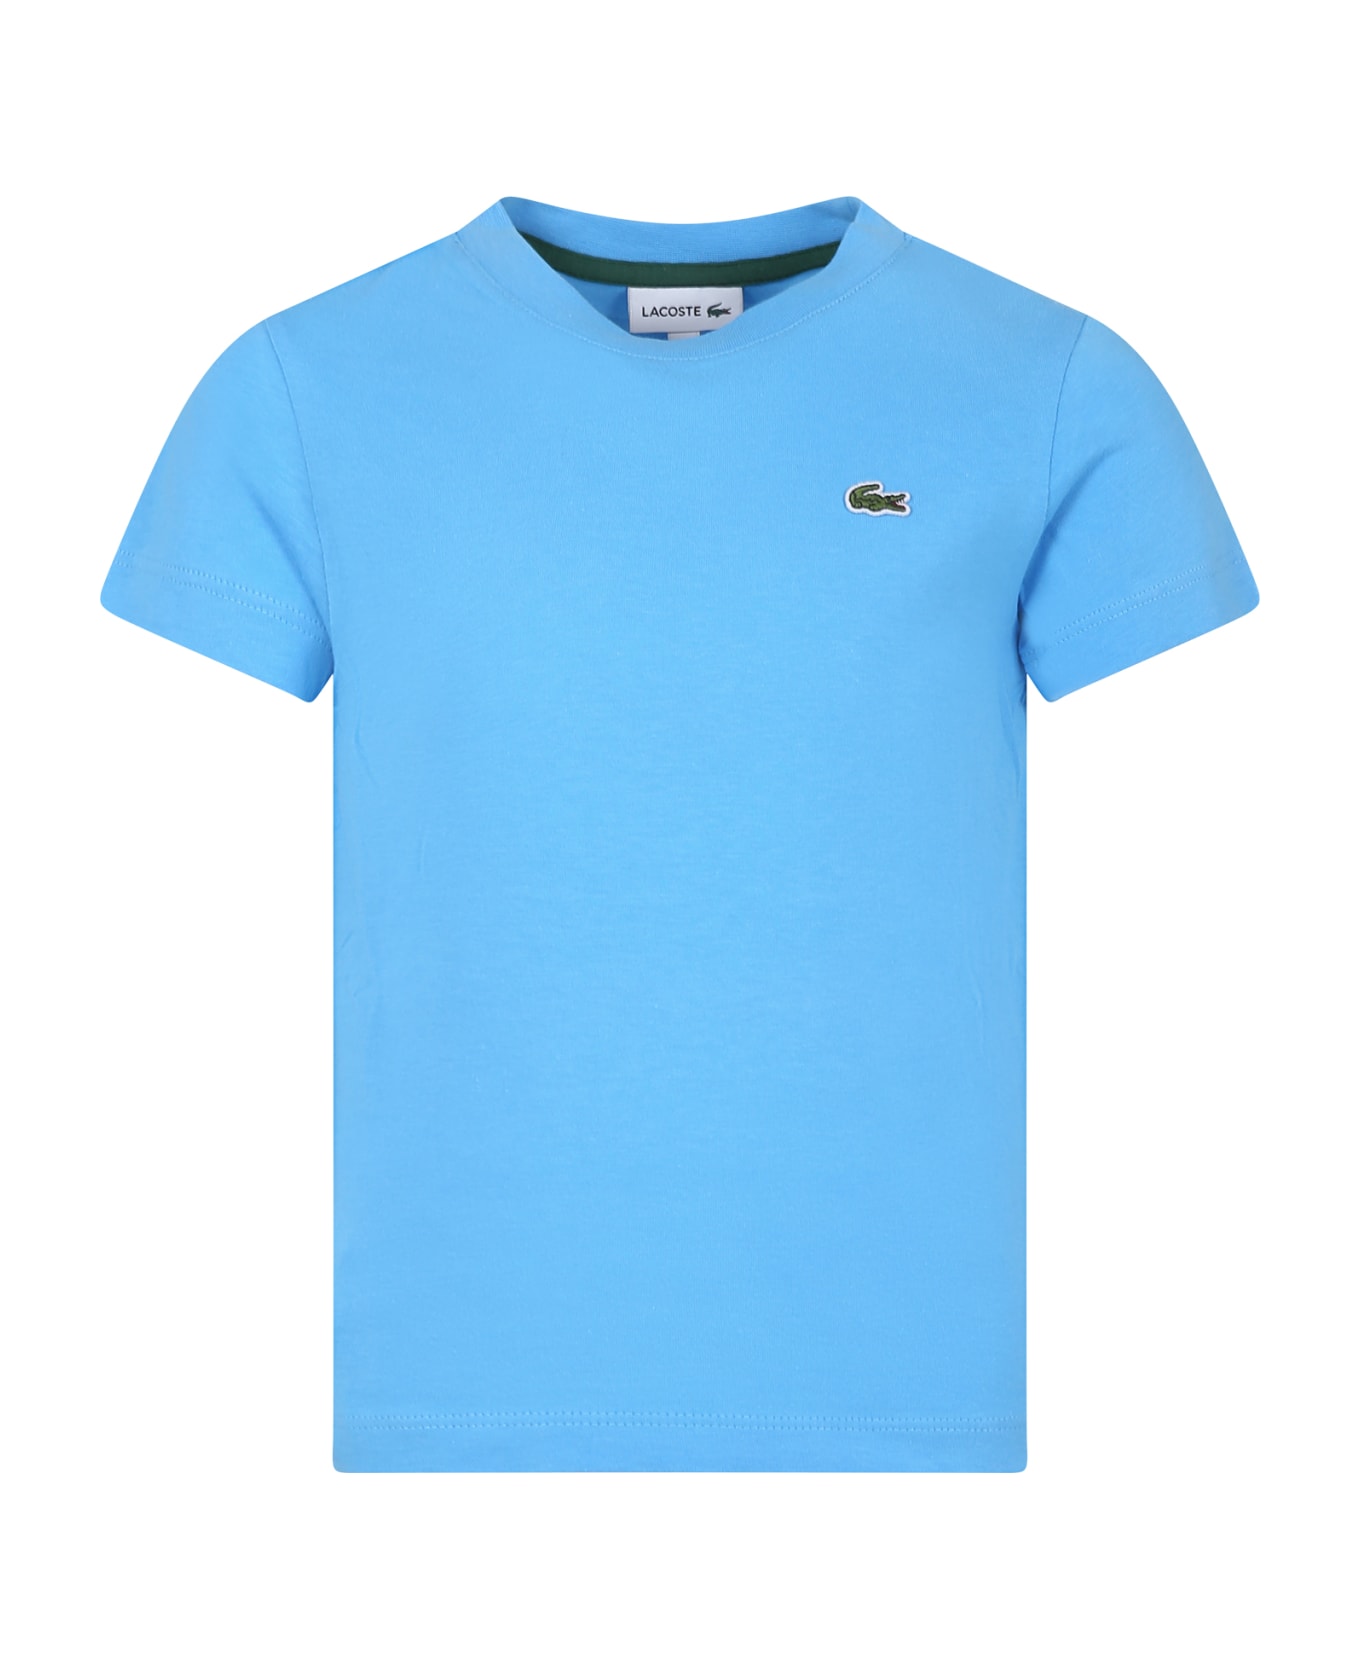 Lacoste Light Blue T-shirt For Boy With Crocodile - Light Blue